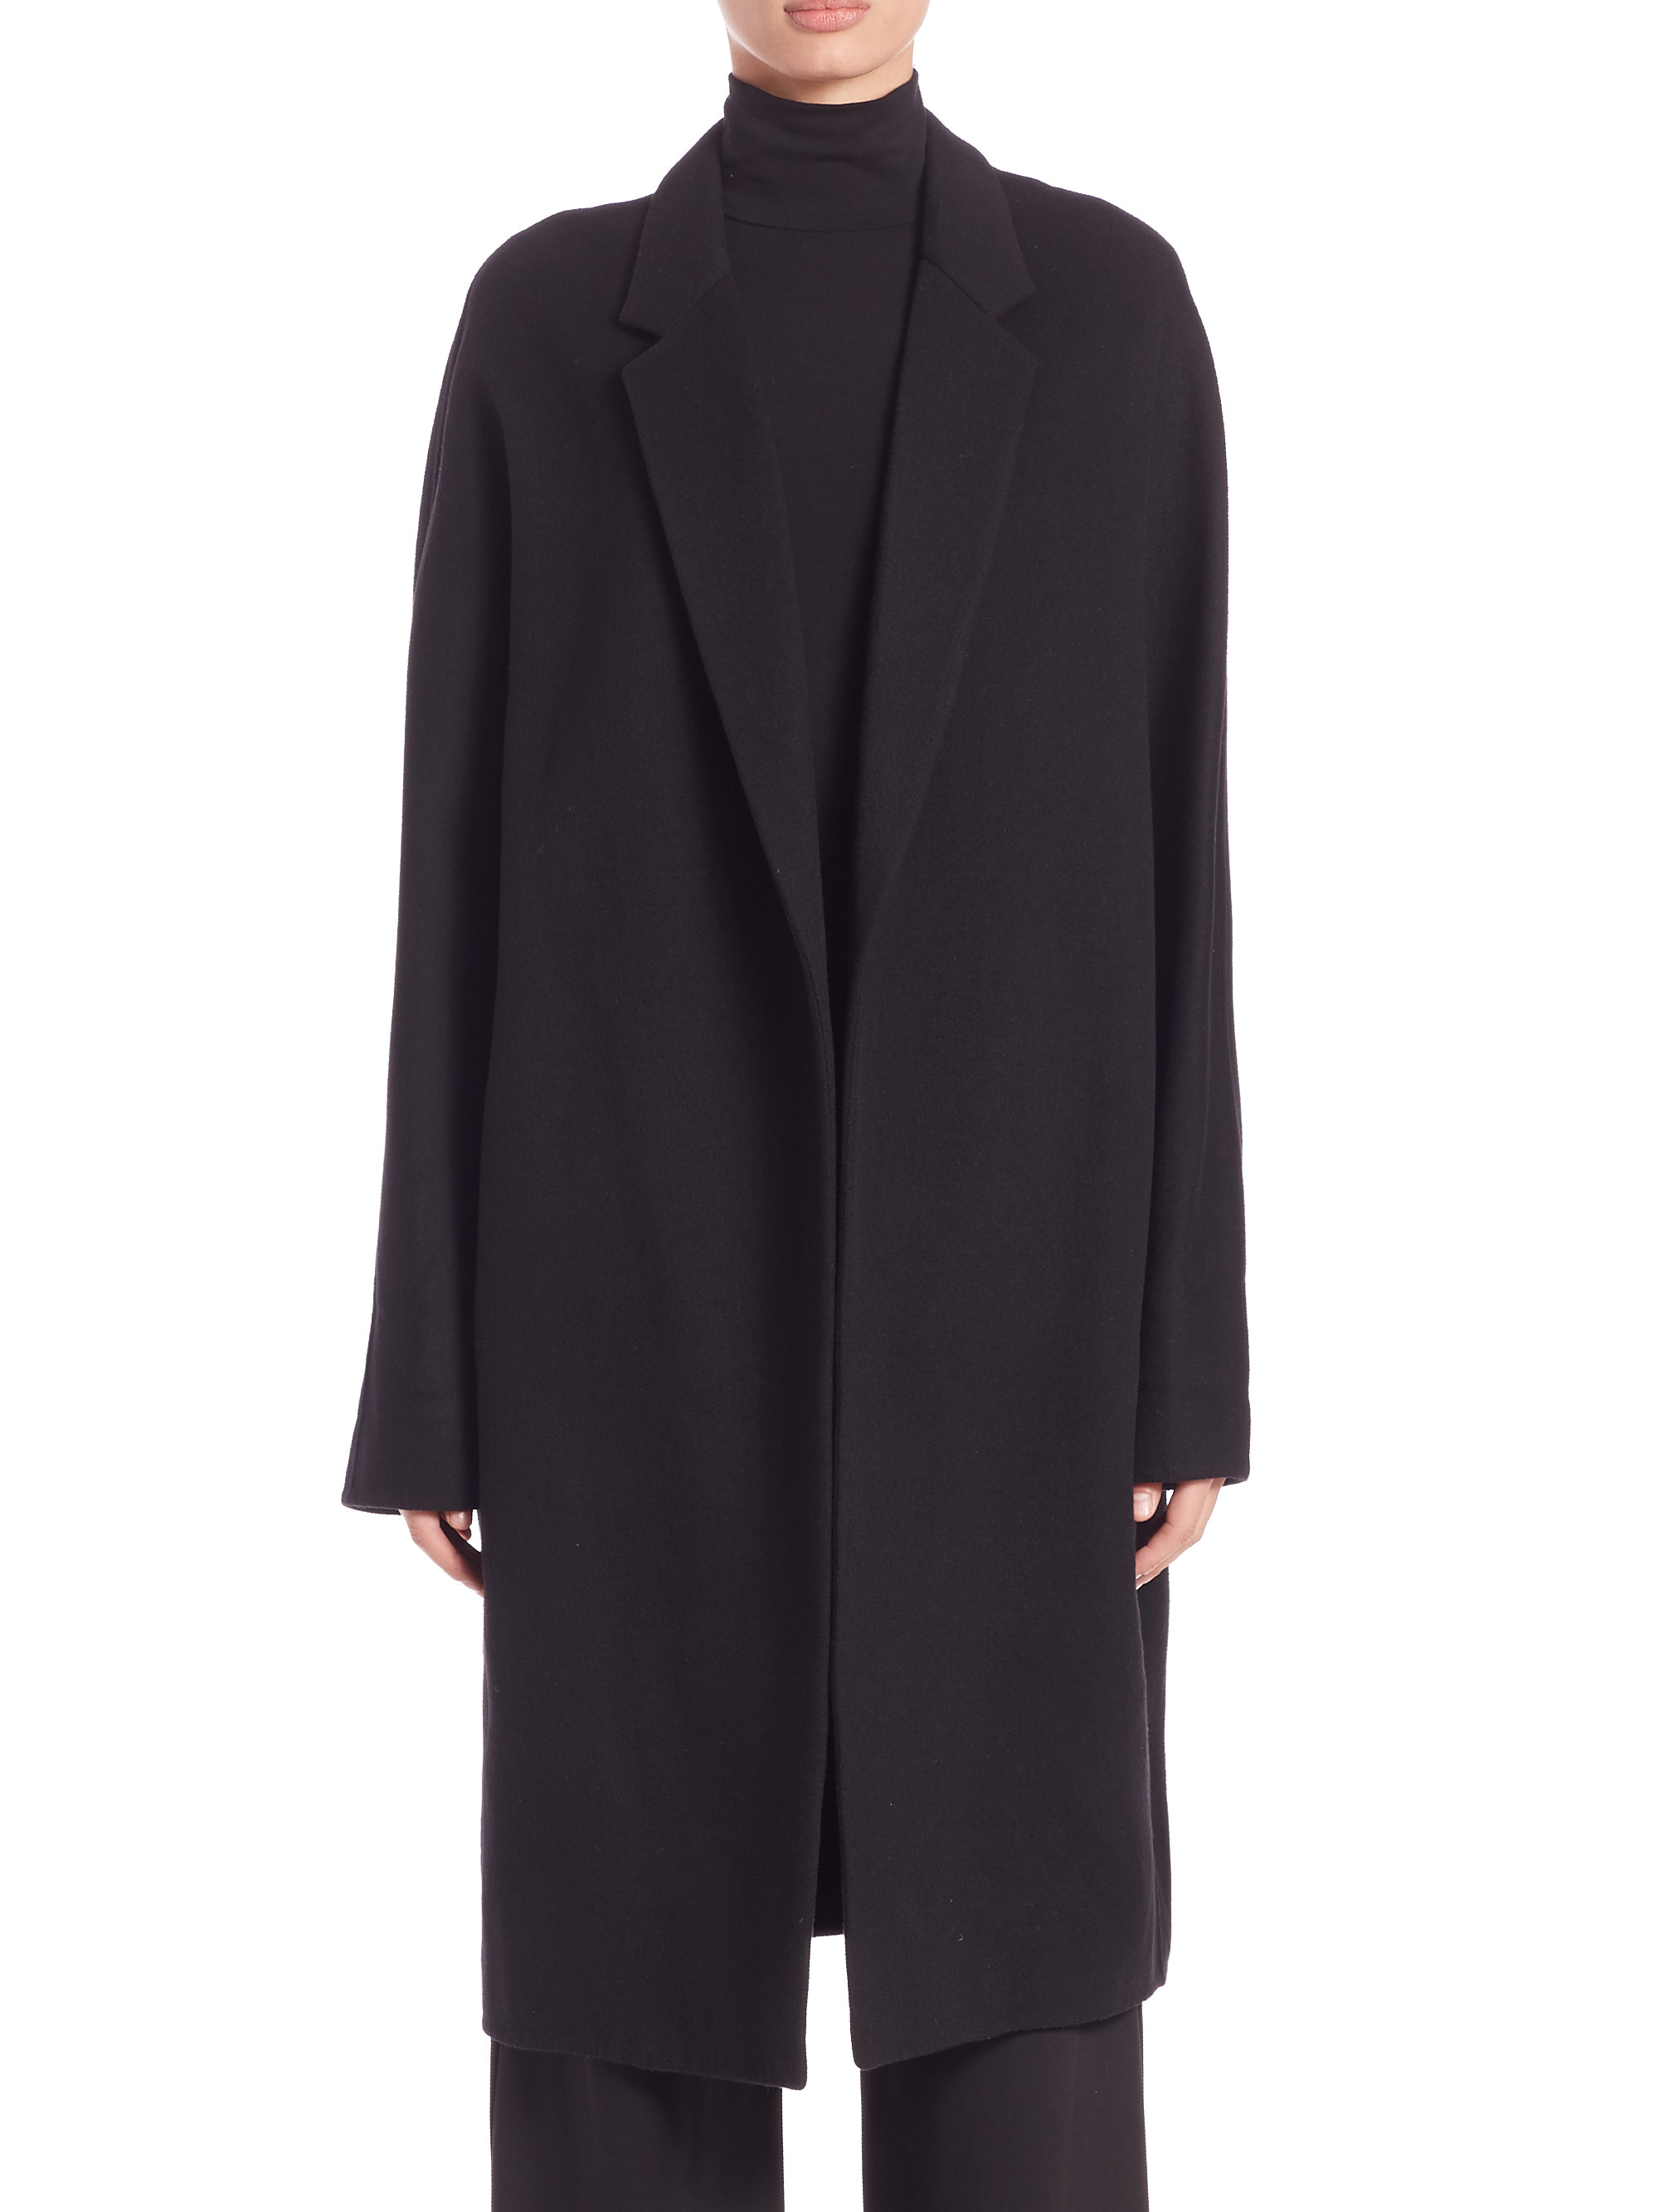 Donna karan Wool/cashmere Slim Coat in Black | Lyst